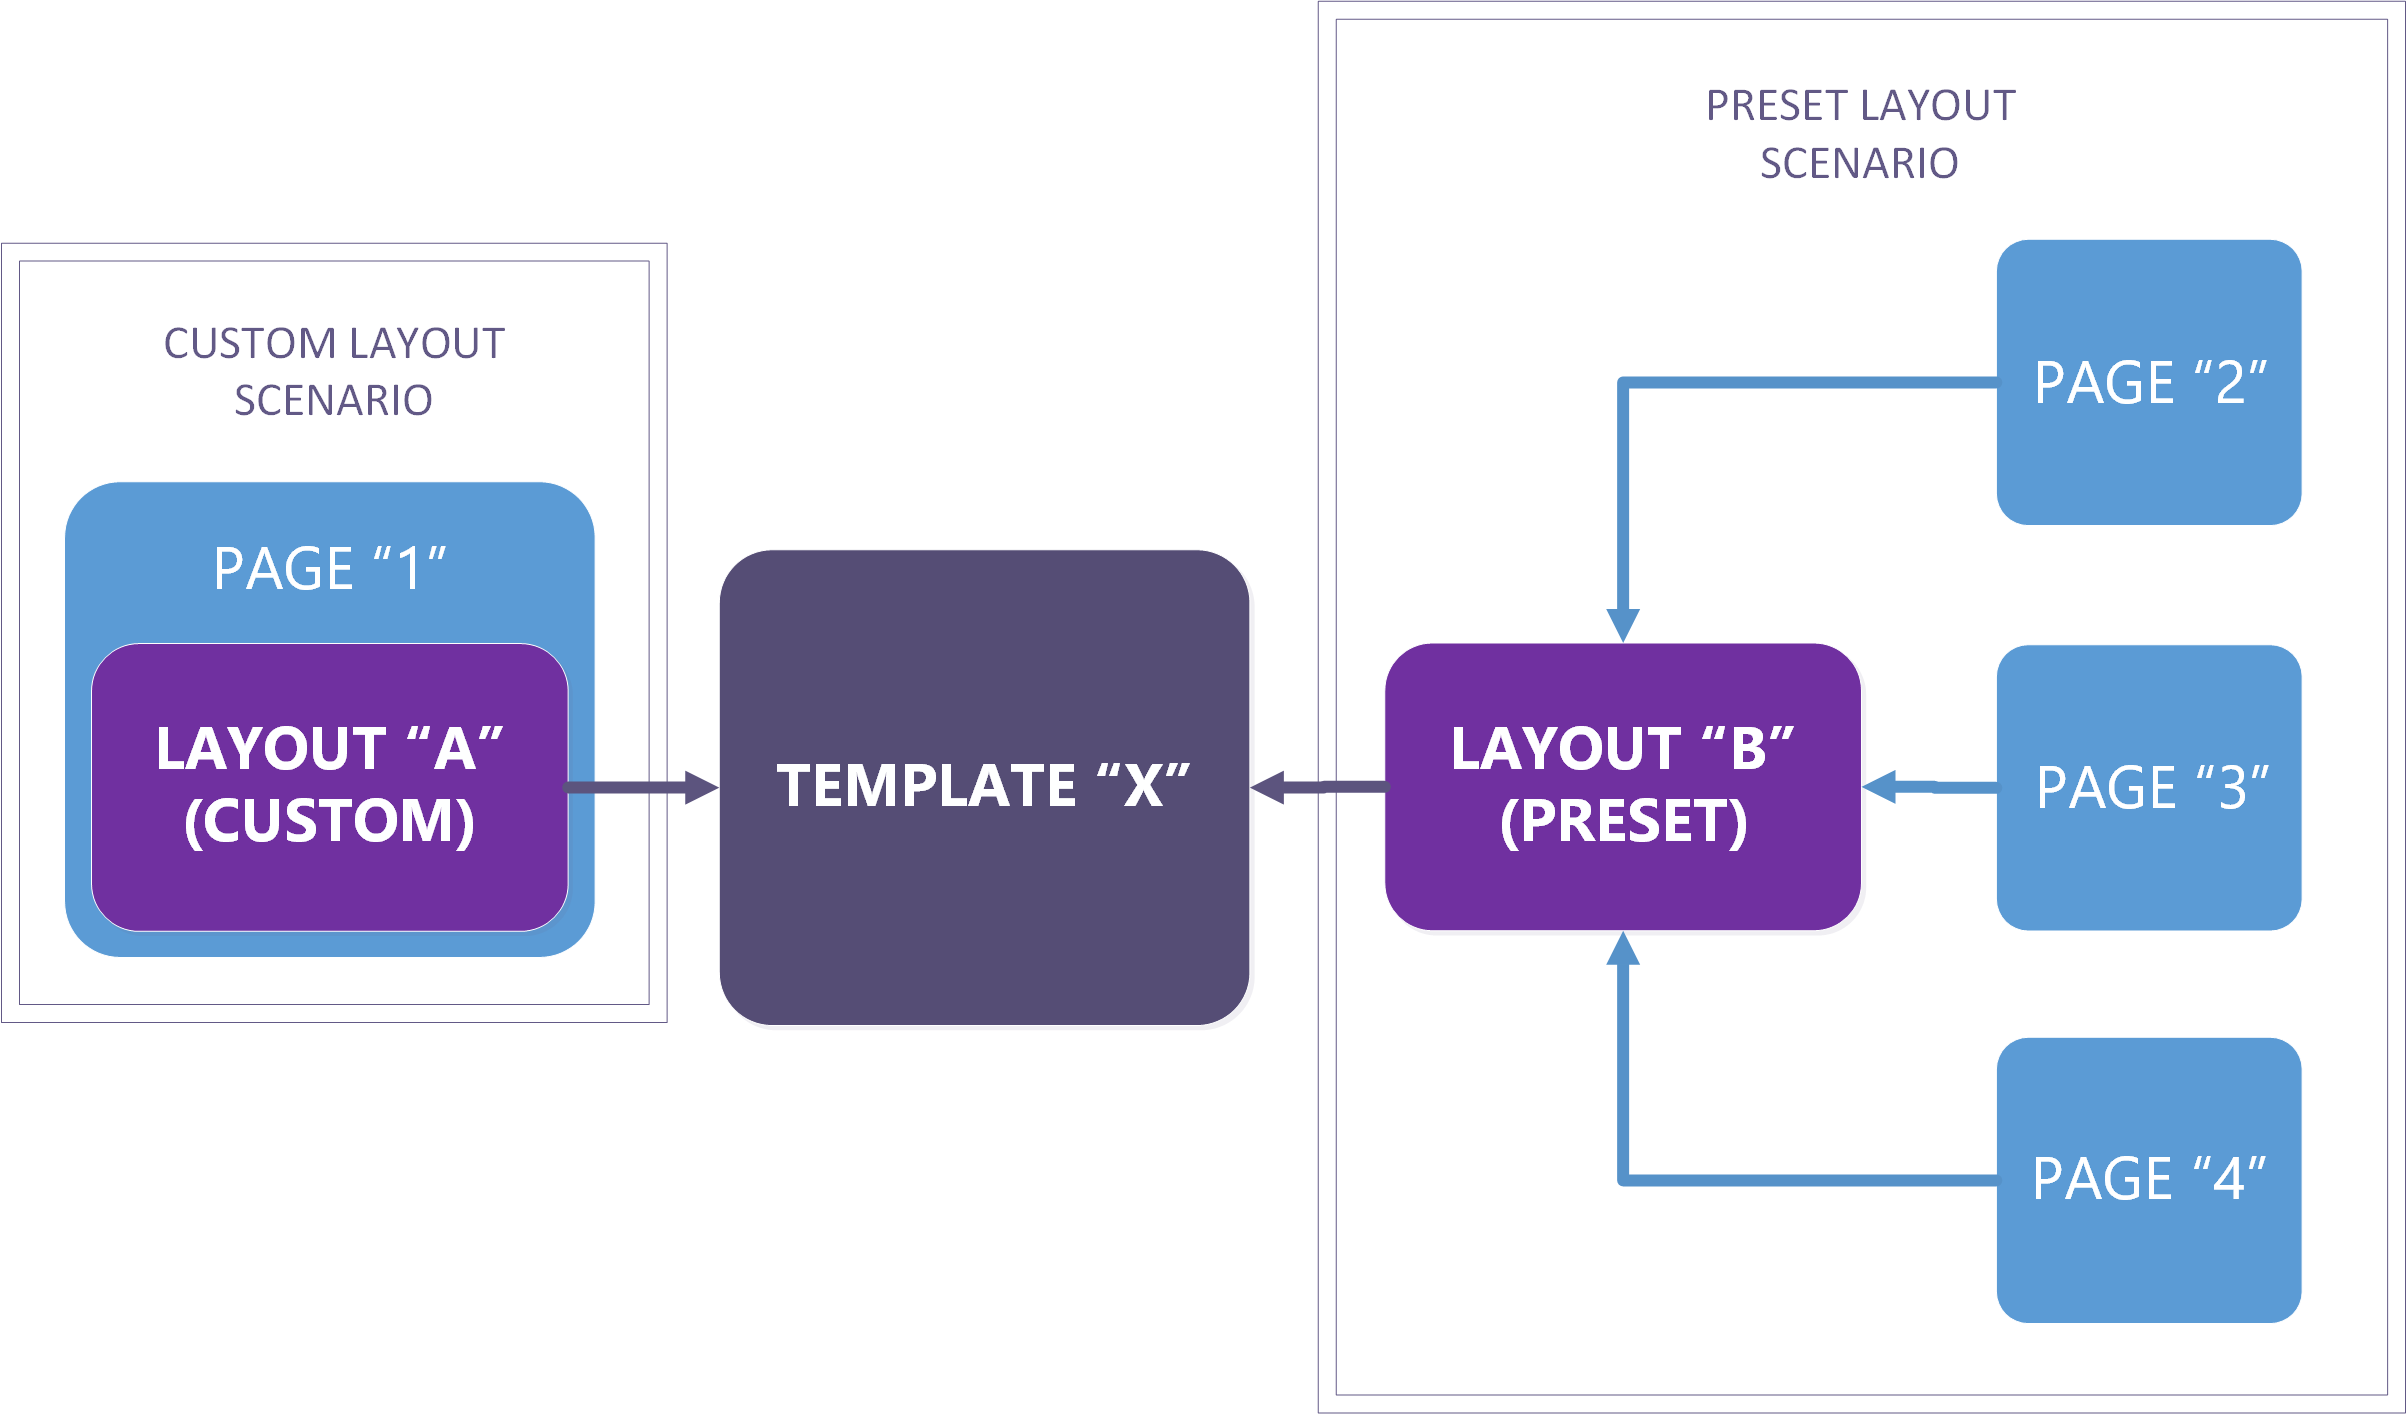 Preset and custom layout scenarios.